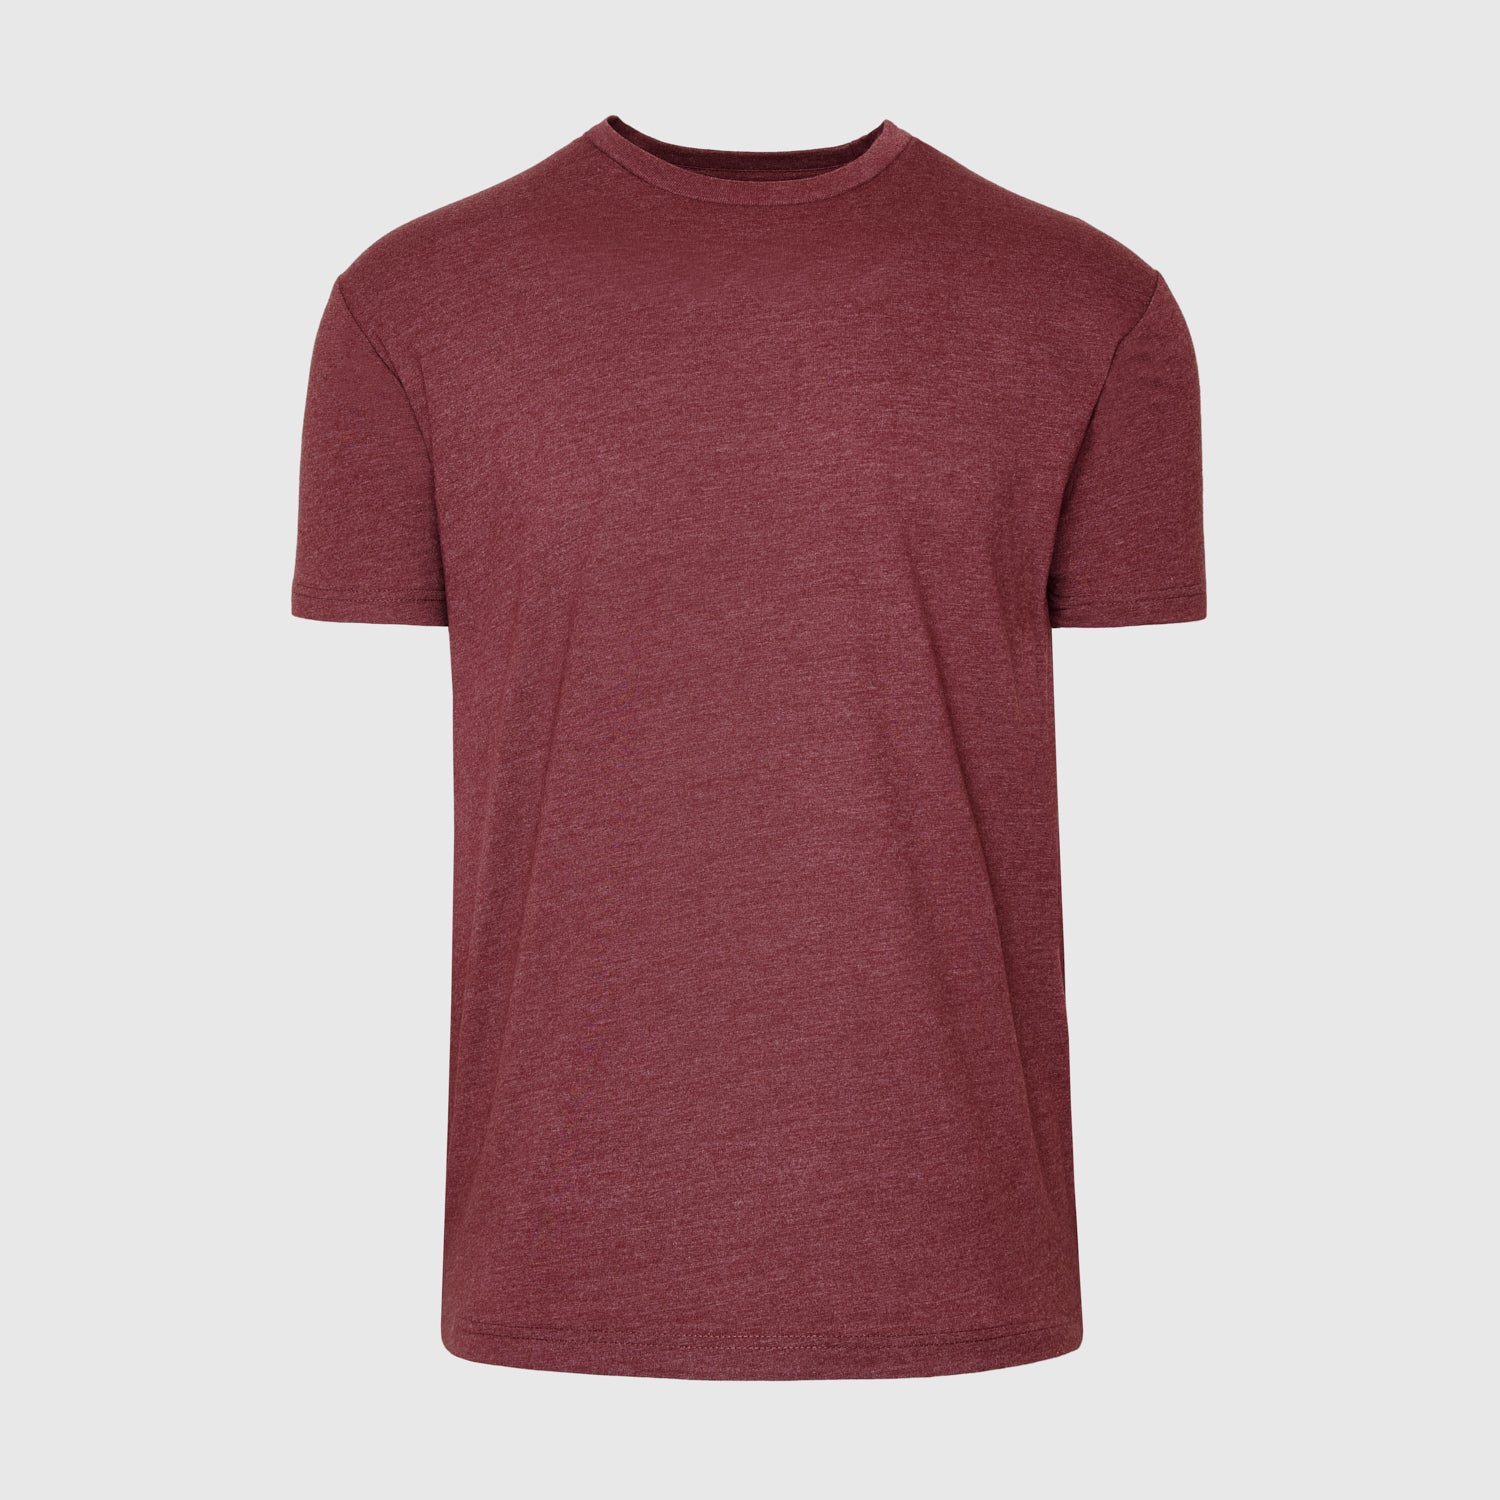 Burgundy Cotton Crew Neck Regular Fit T-Shirt